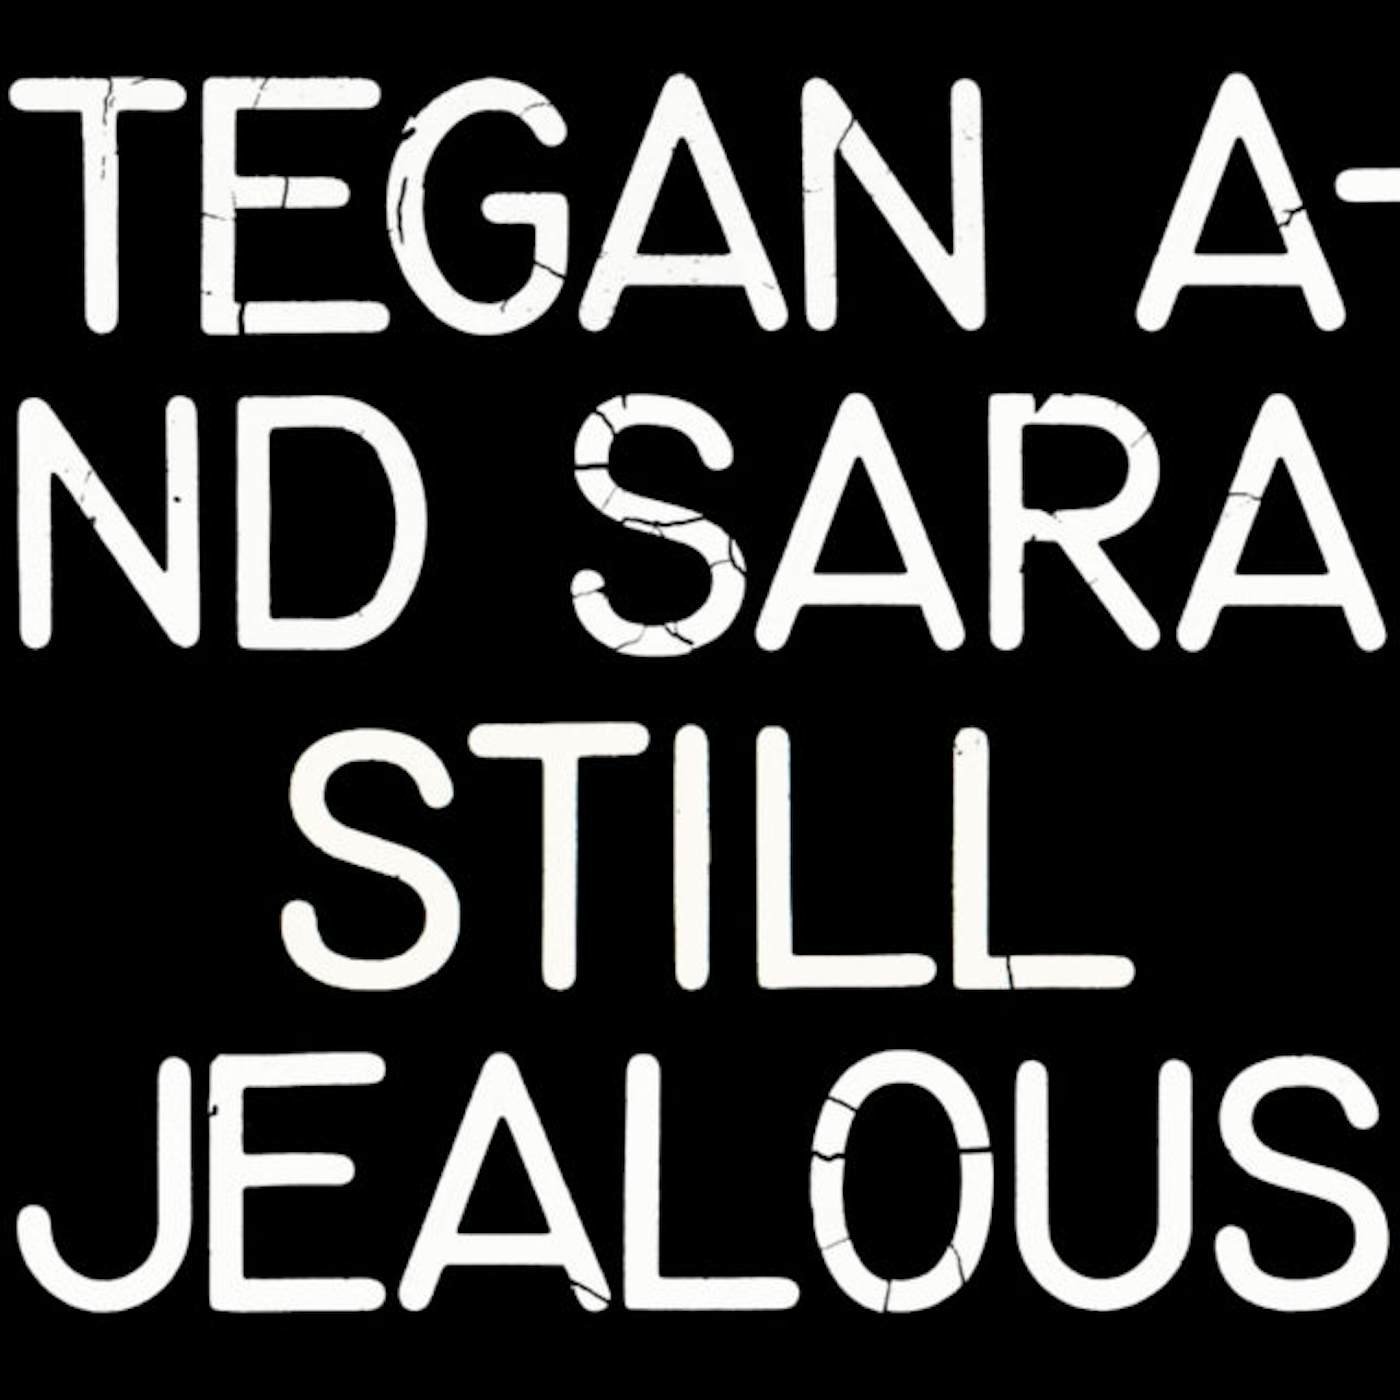 Tegan and Sara LP Vinyl Record - Still Jealous (Opaque Red Vinyl) (Rsd 20. 22)